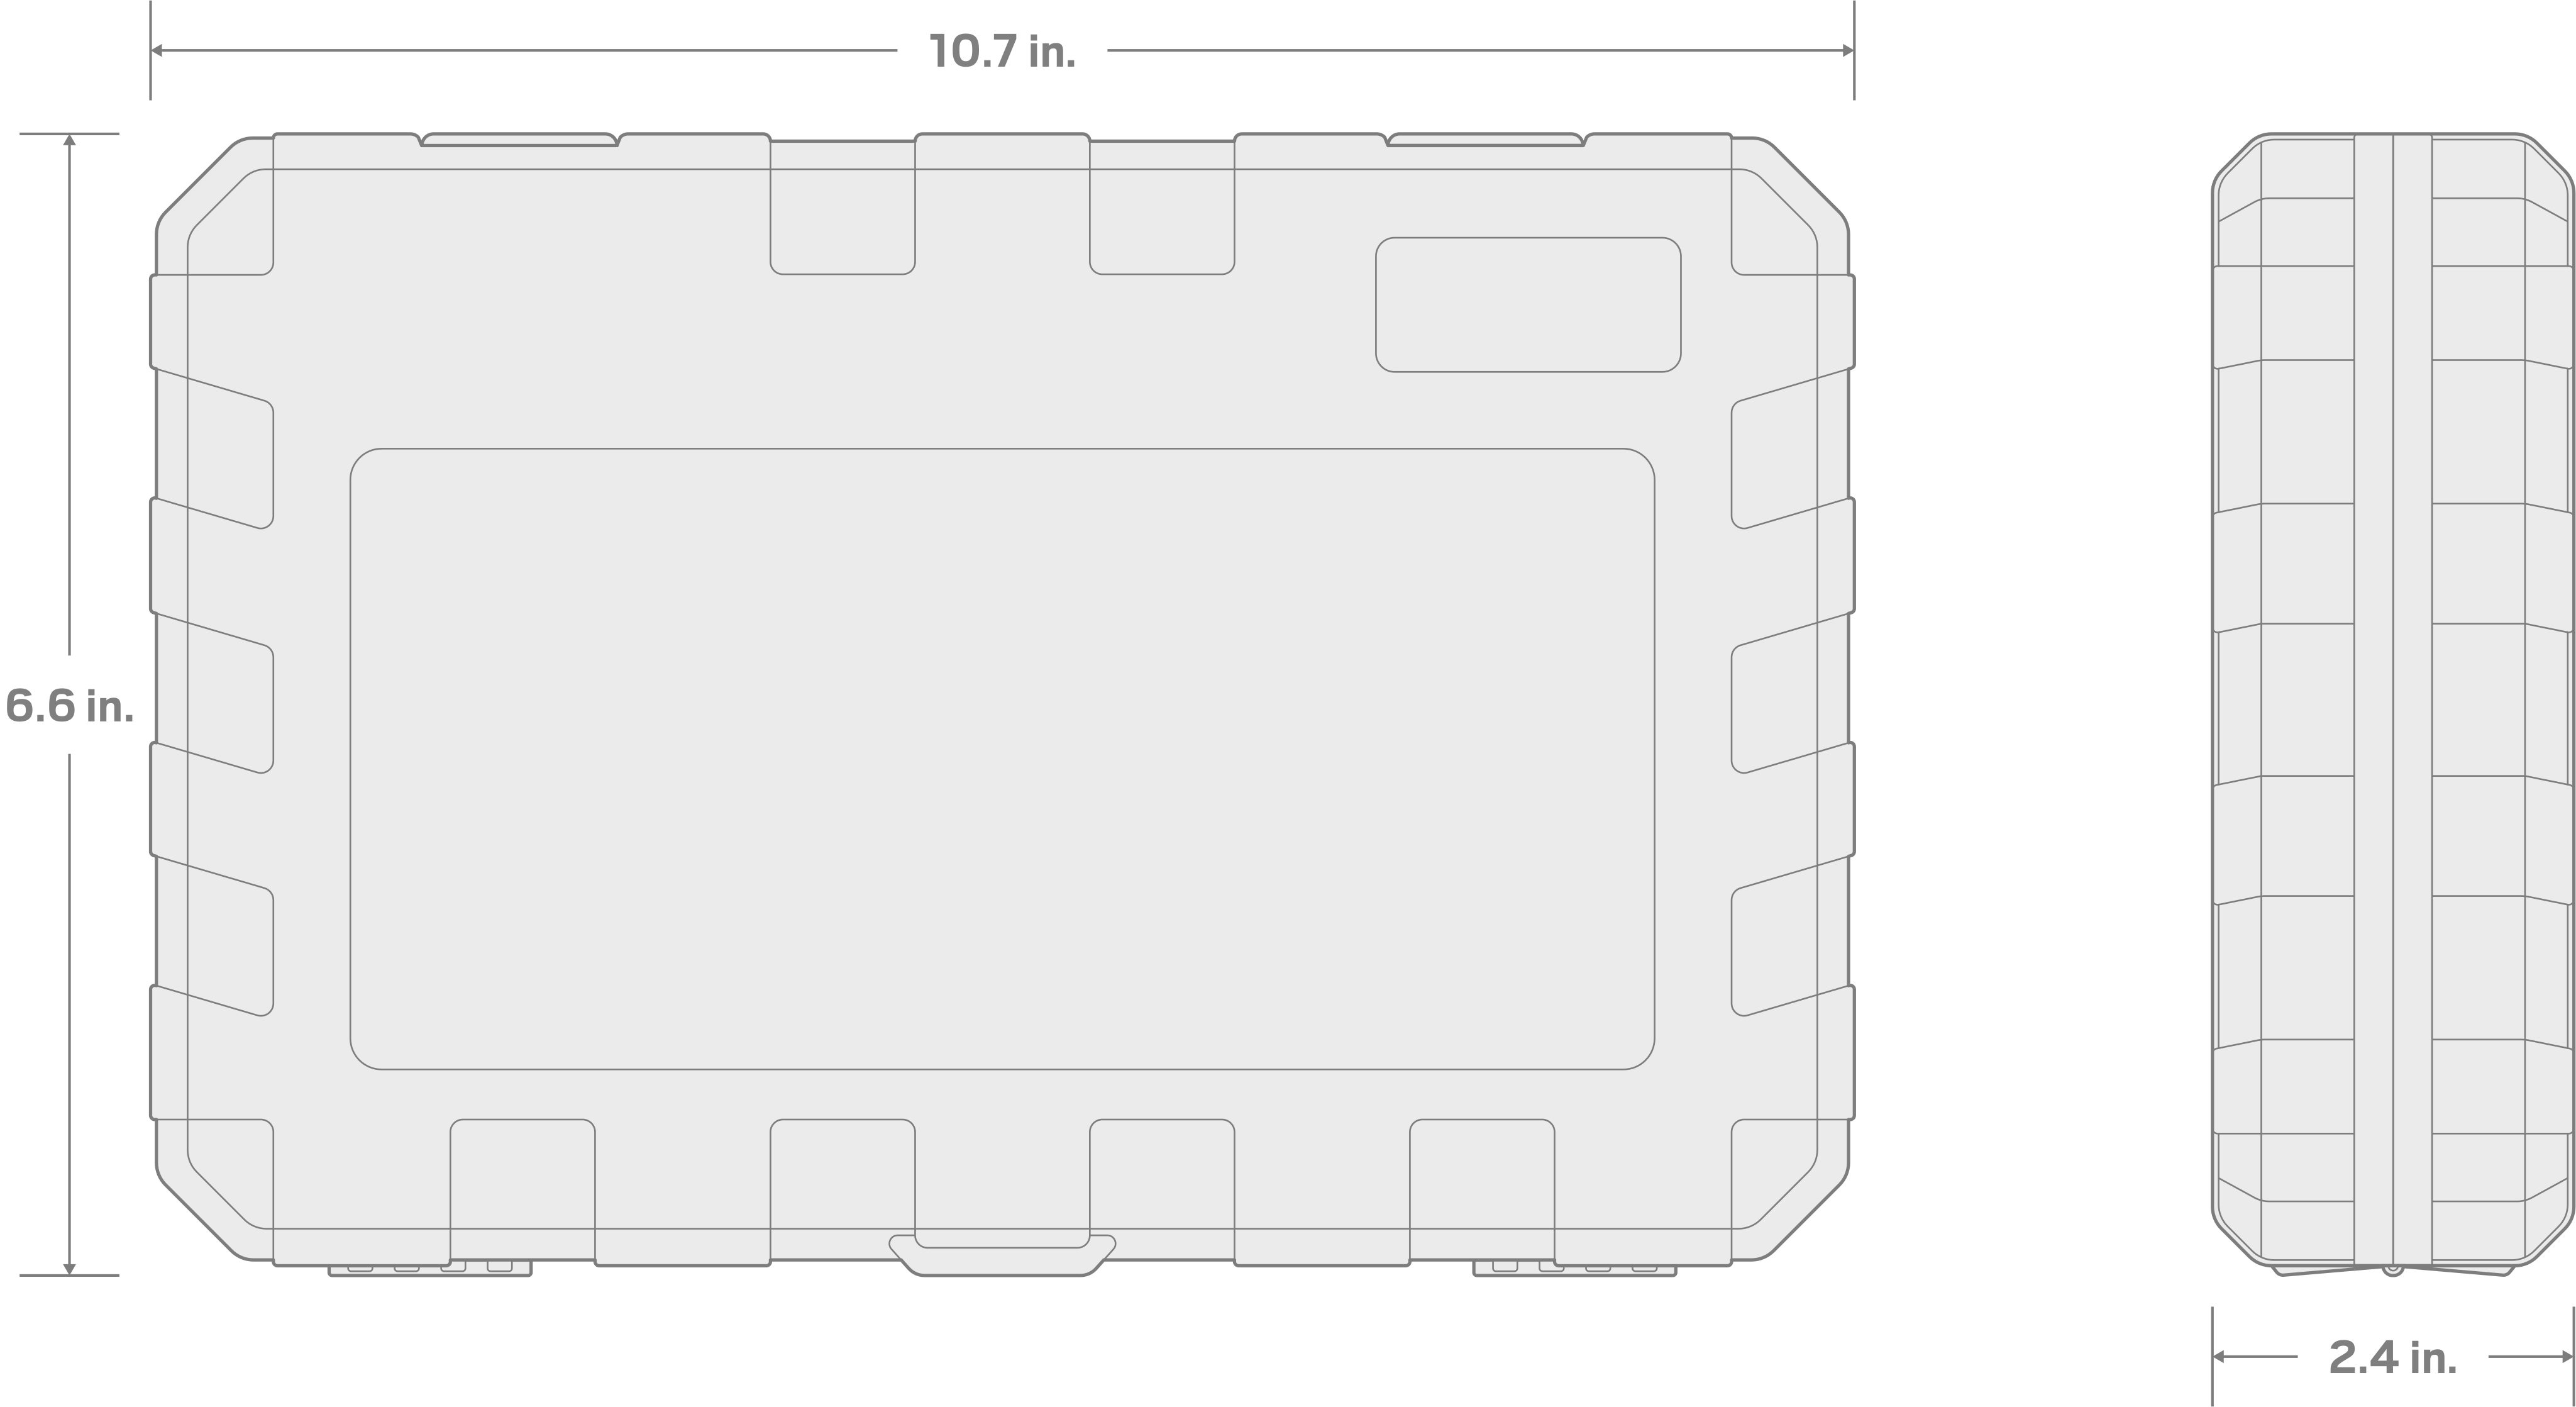 Specs for 3/8 Inch Drive Long Hex Bit Socket Set, 18-Piece (1/8-3/8 in., 3-10 mm)